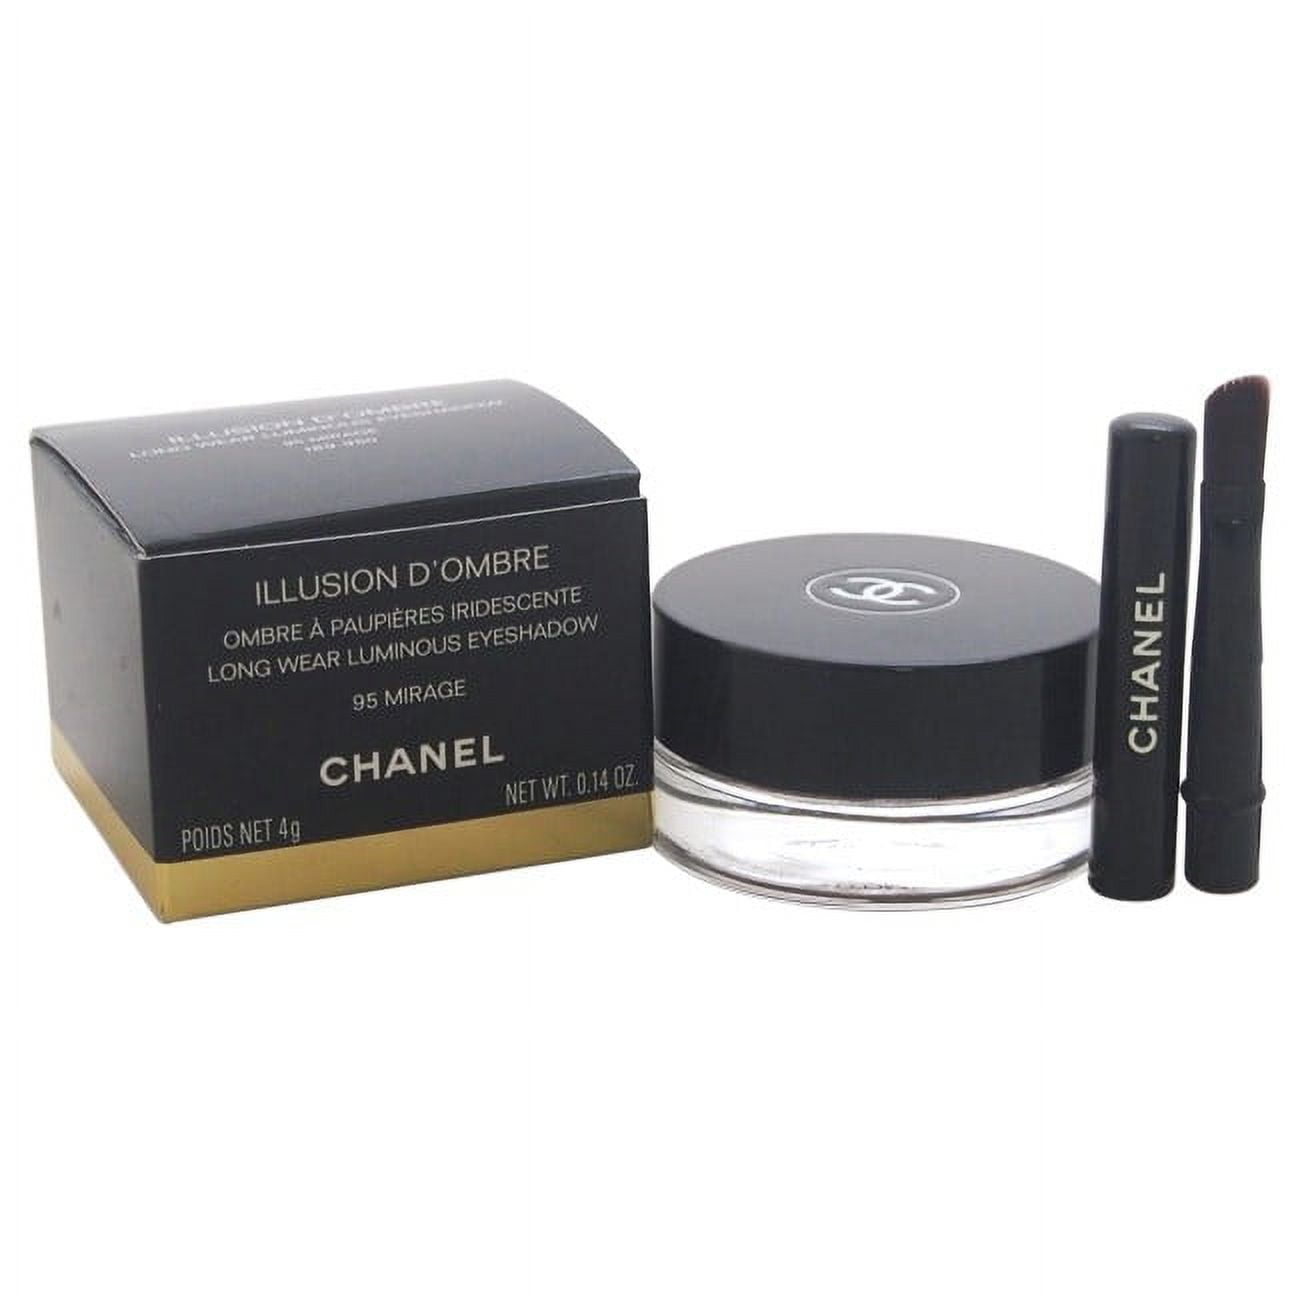 Chanel Illusion D'Ombre 95 Mirage Long Wear Luminous Eyeshadow - 0.14 Oz 